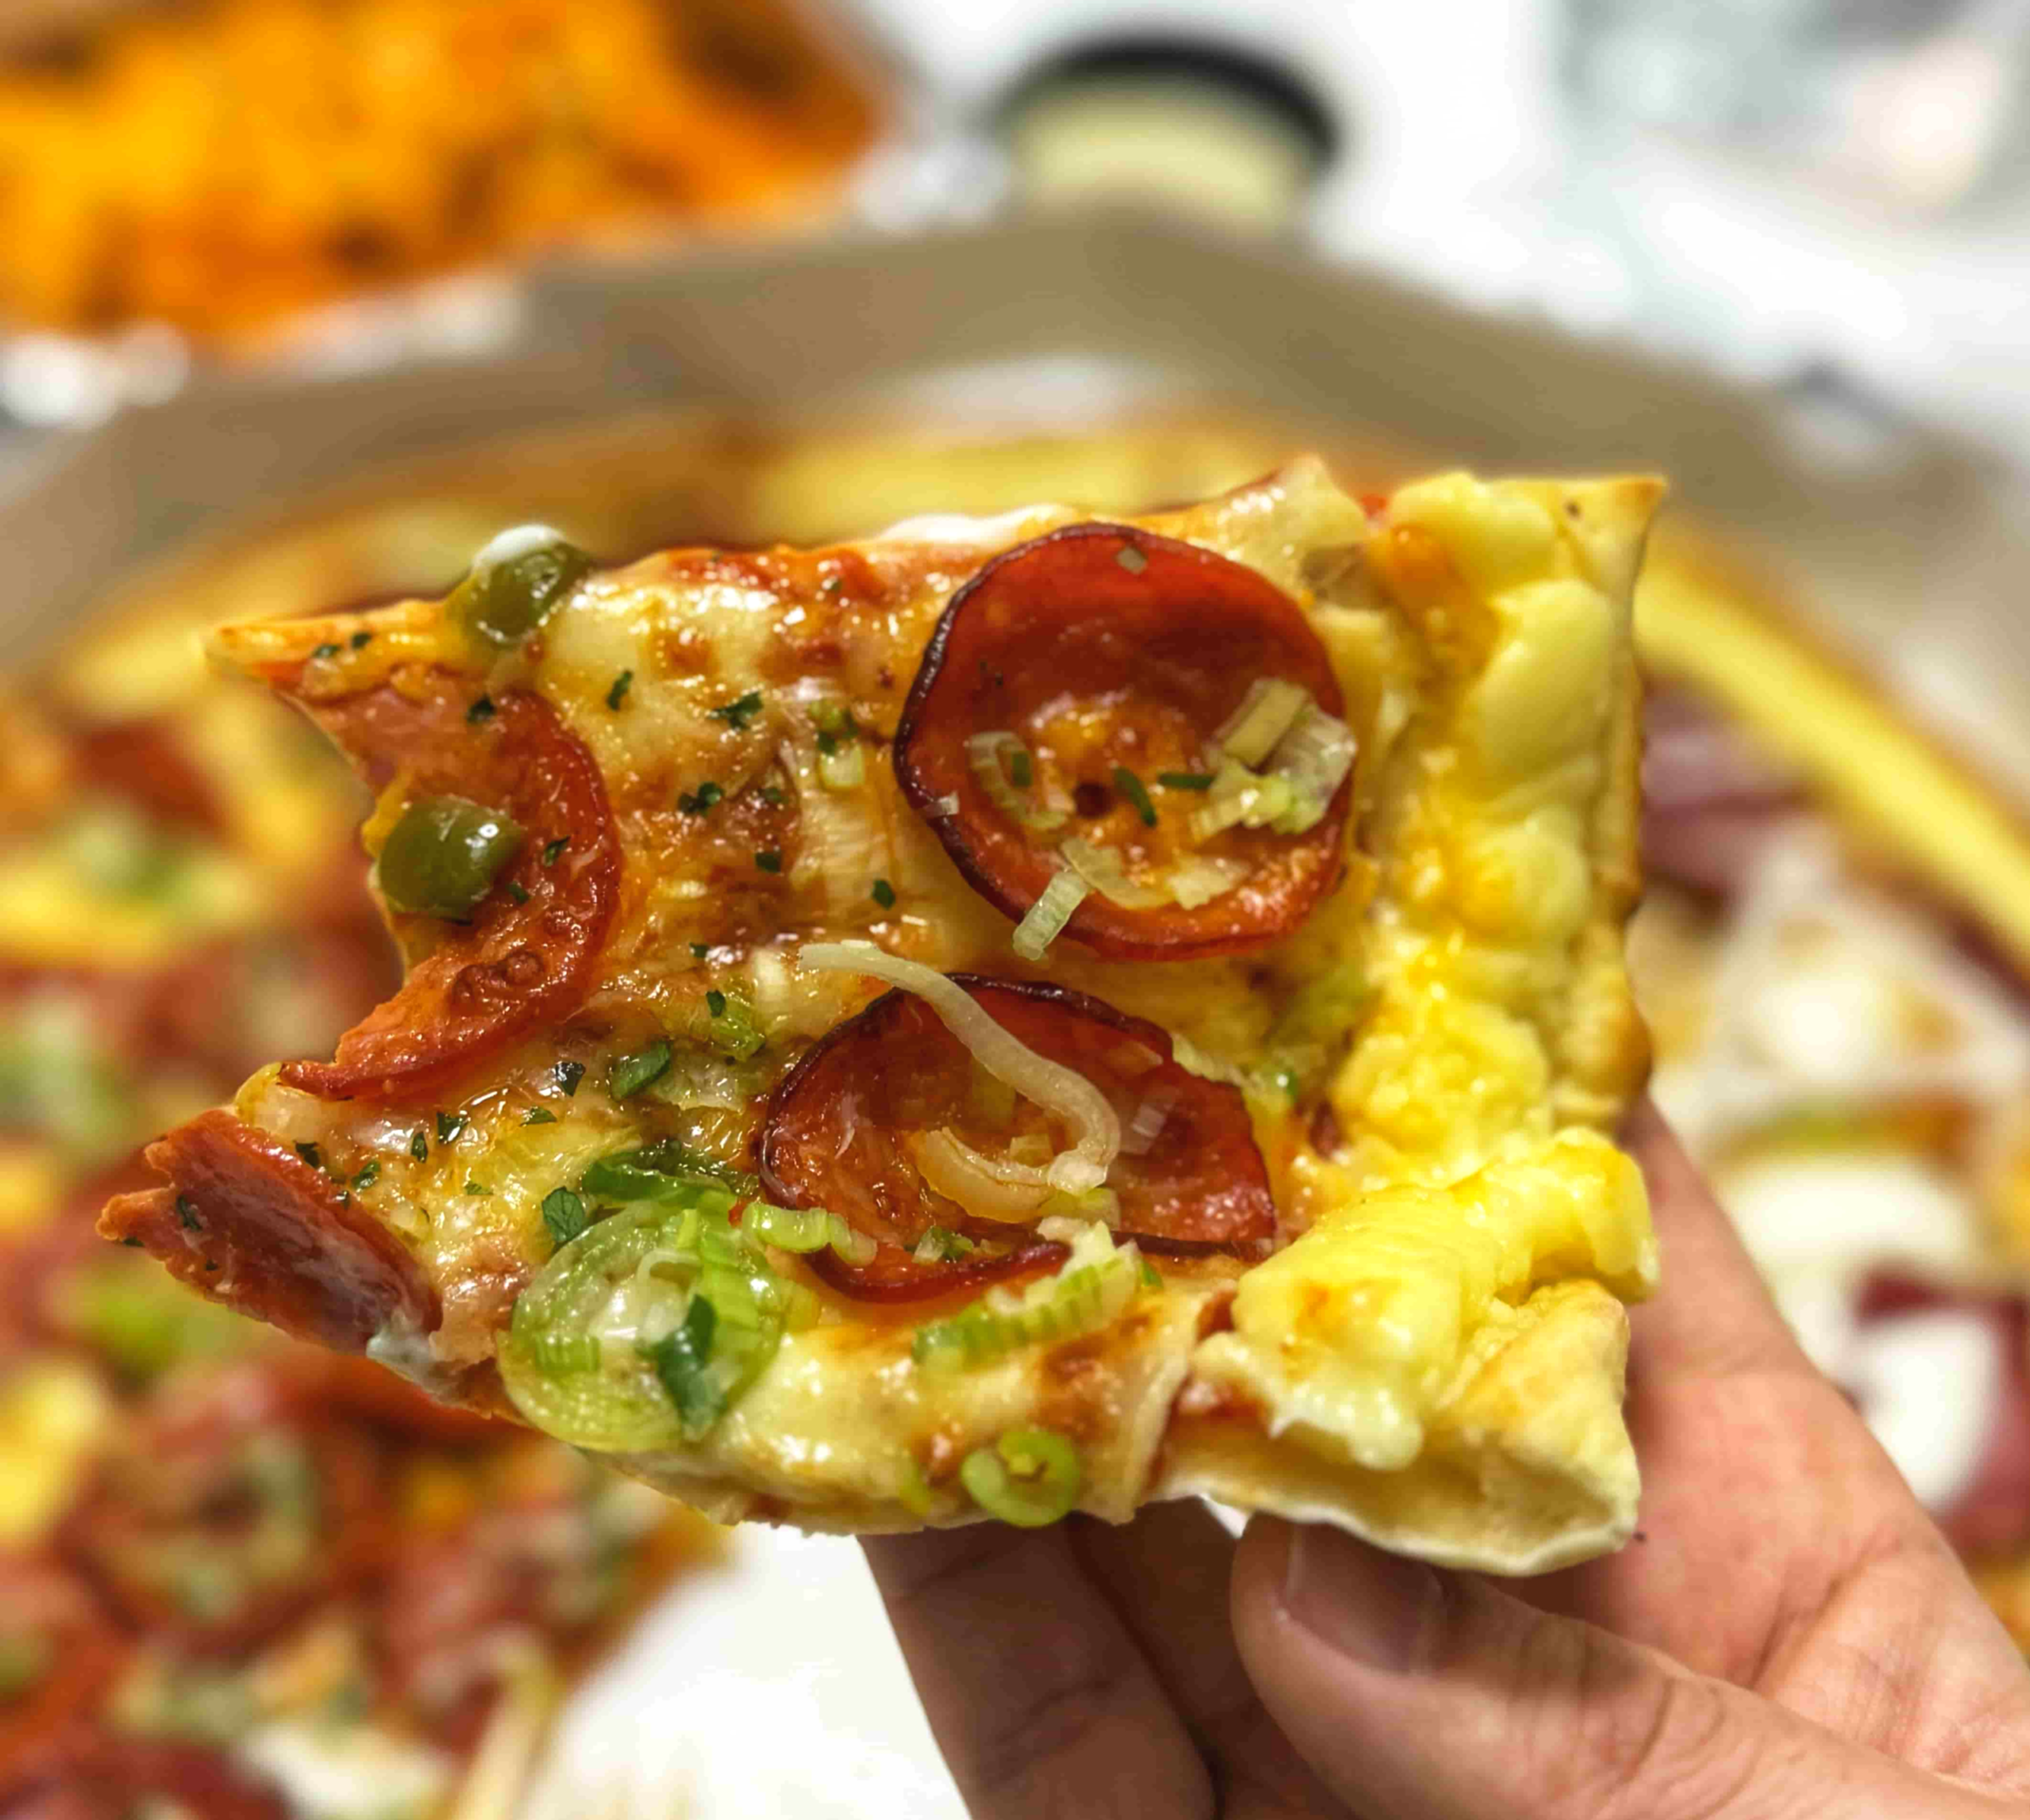 &amp;#39;피자와일드&amp;#39;의 페파로니 피자를 먹는 사진